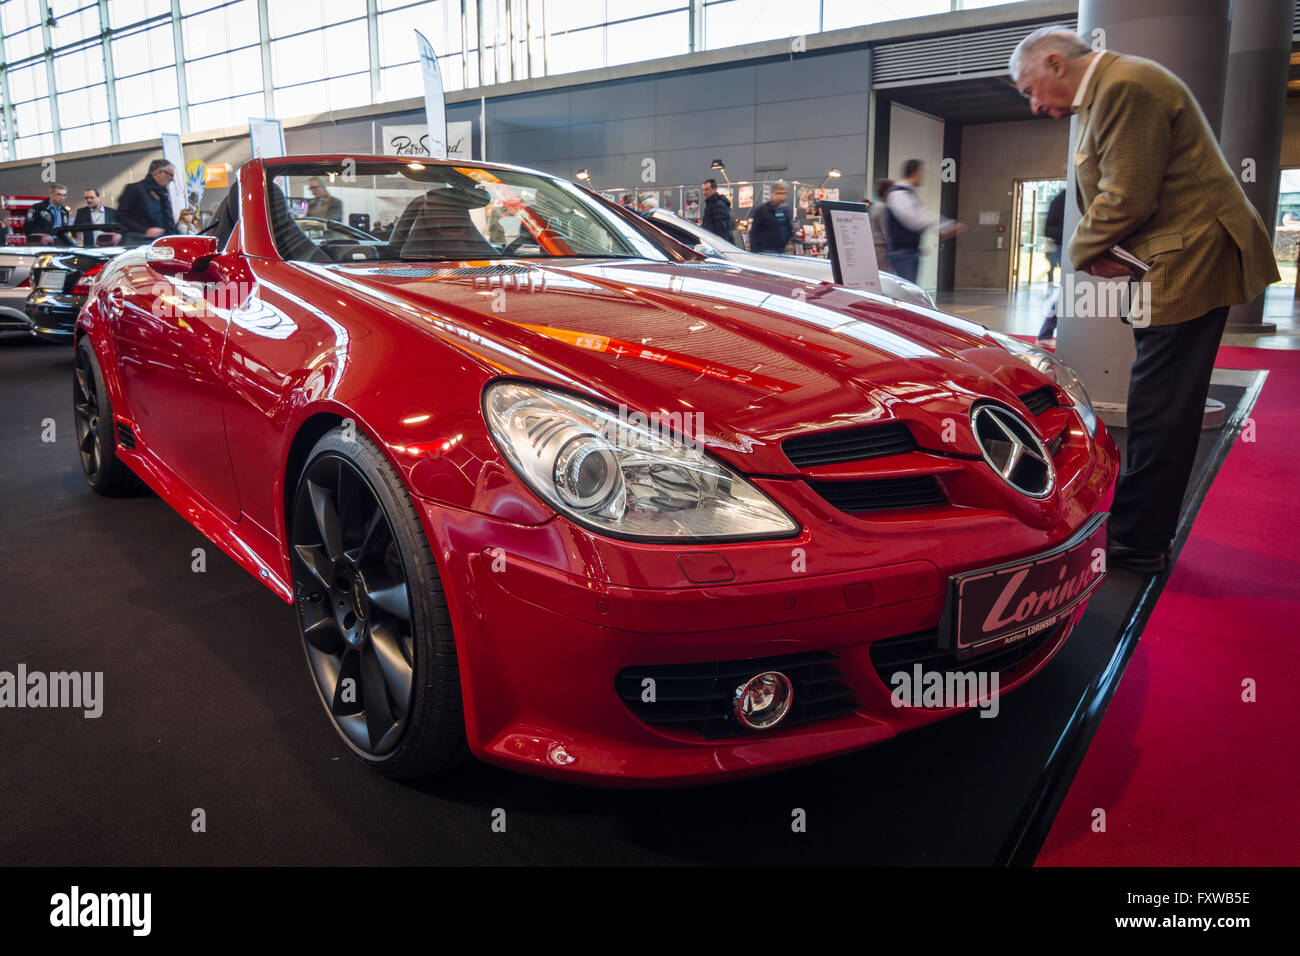 Mercedes slk 230 kompressor auto hi-res stock photography and images - Alamy